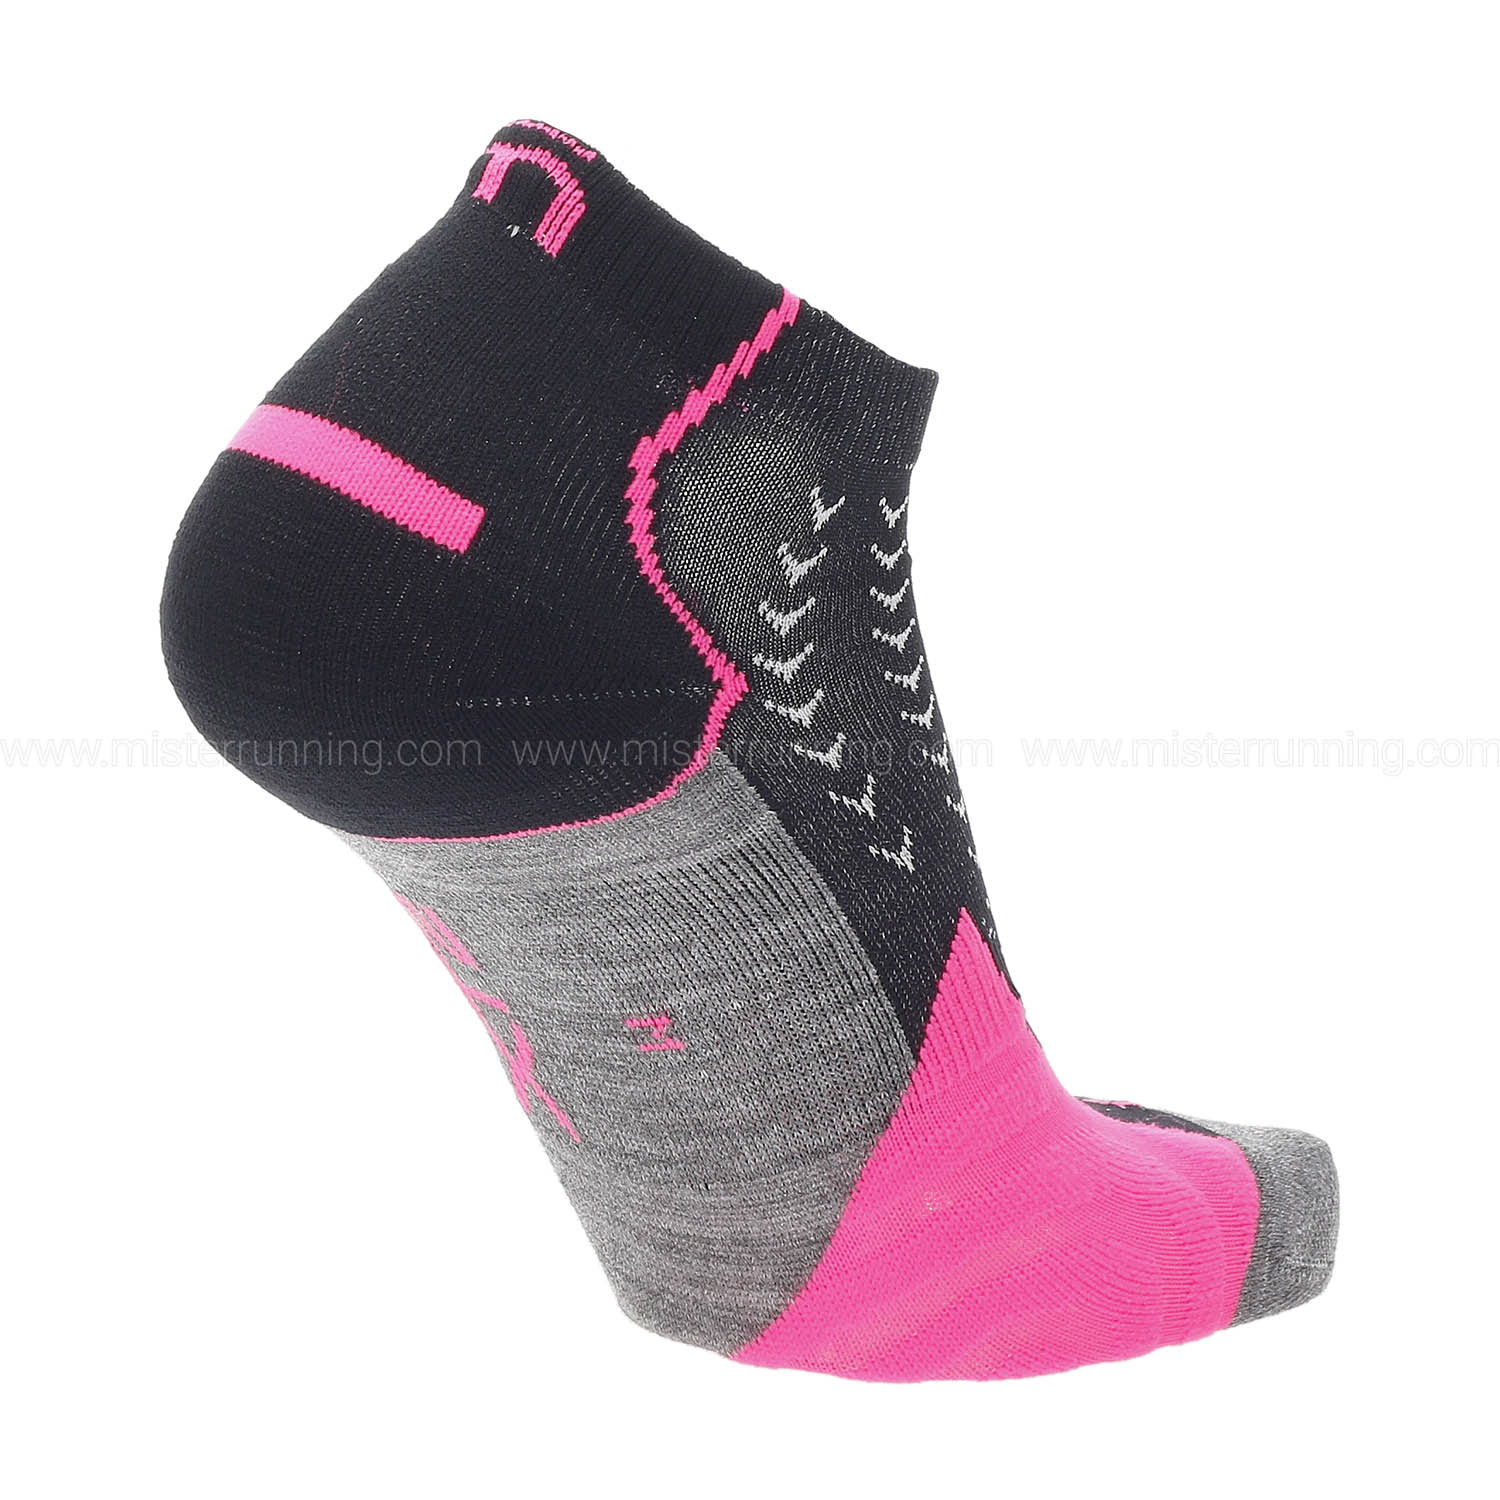 Mico Odor Zero Protech Light Weight Socks Woman - Nero/Fucsia Fluo